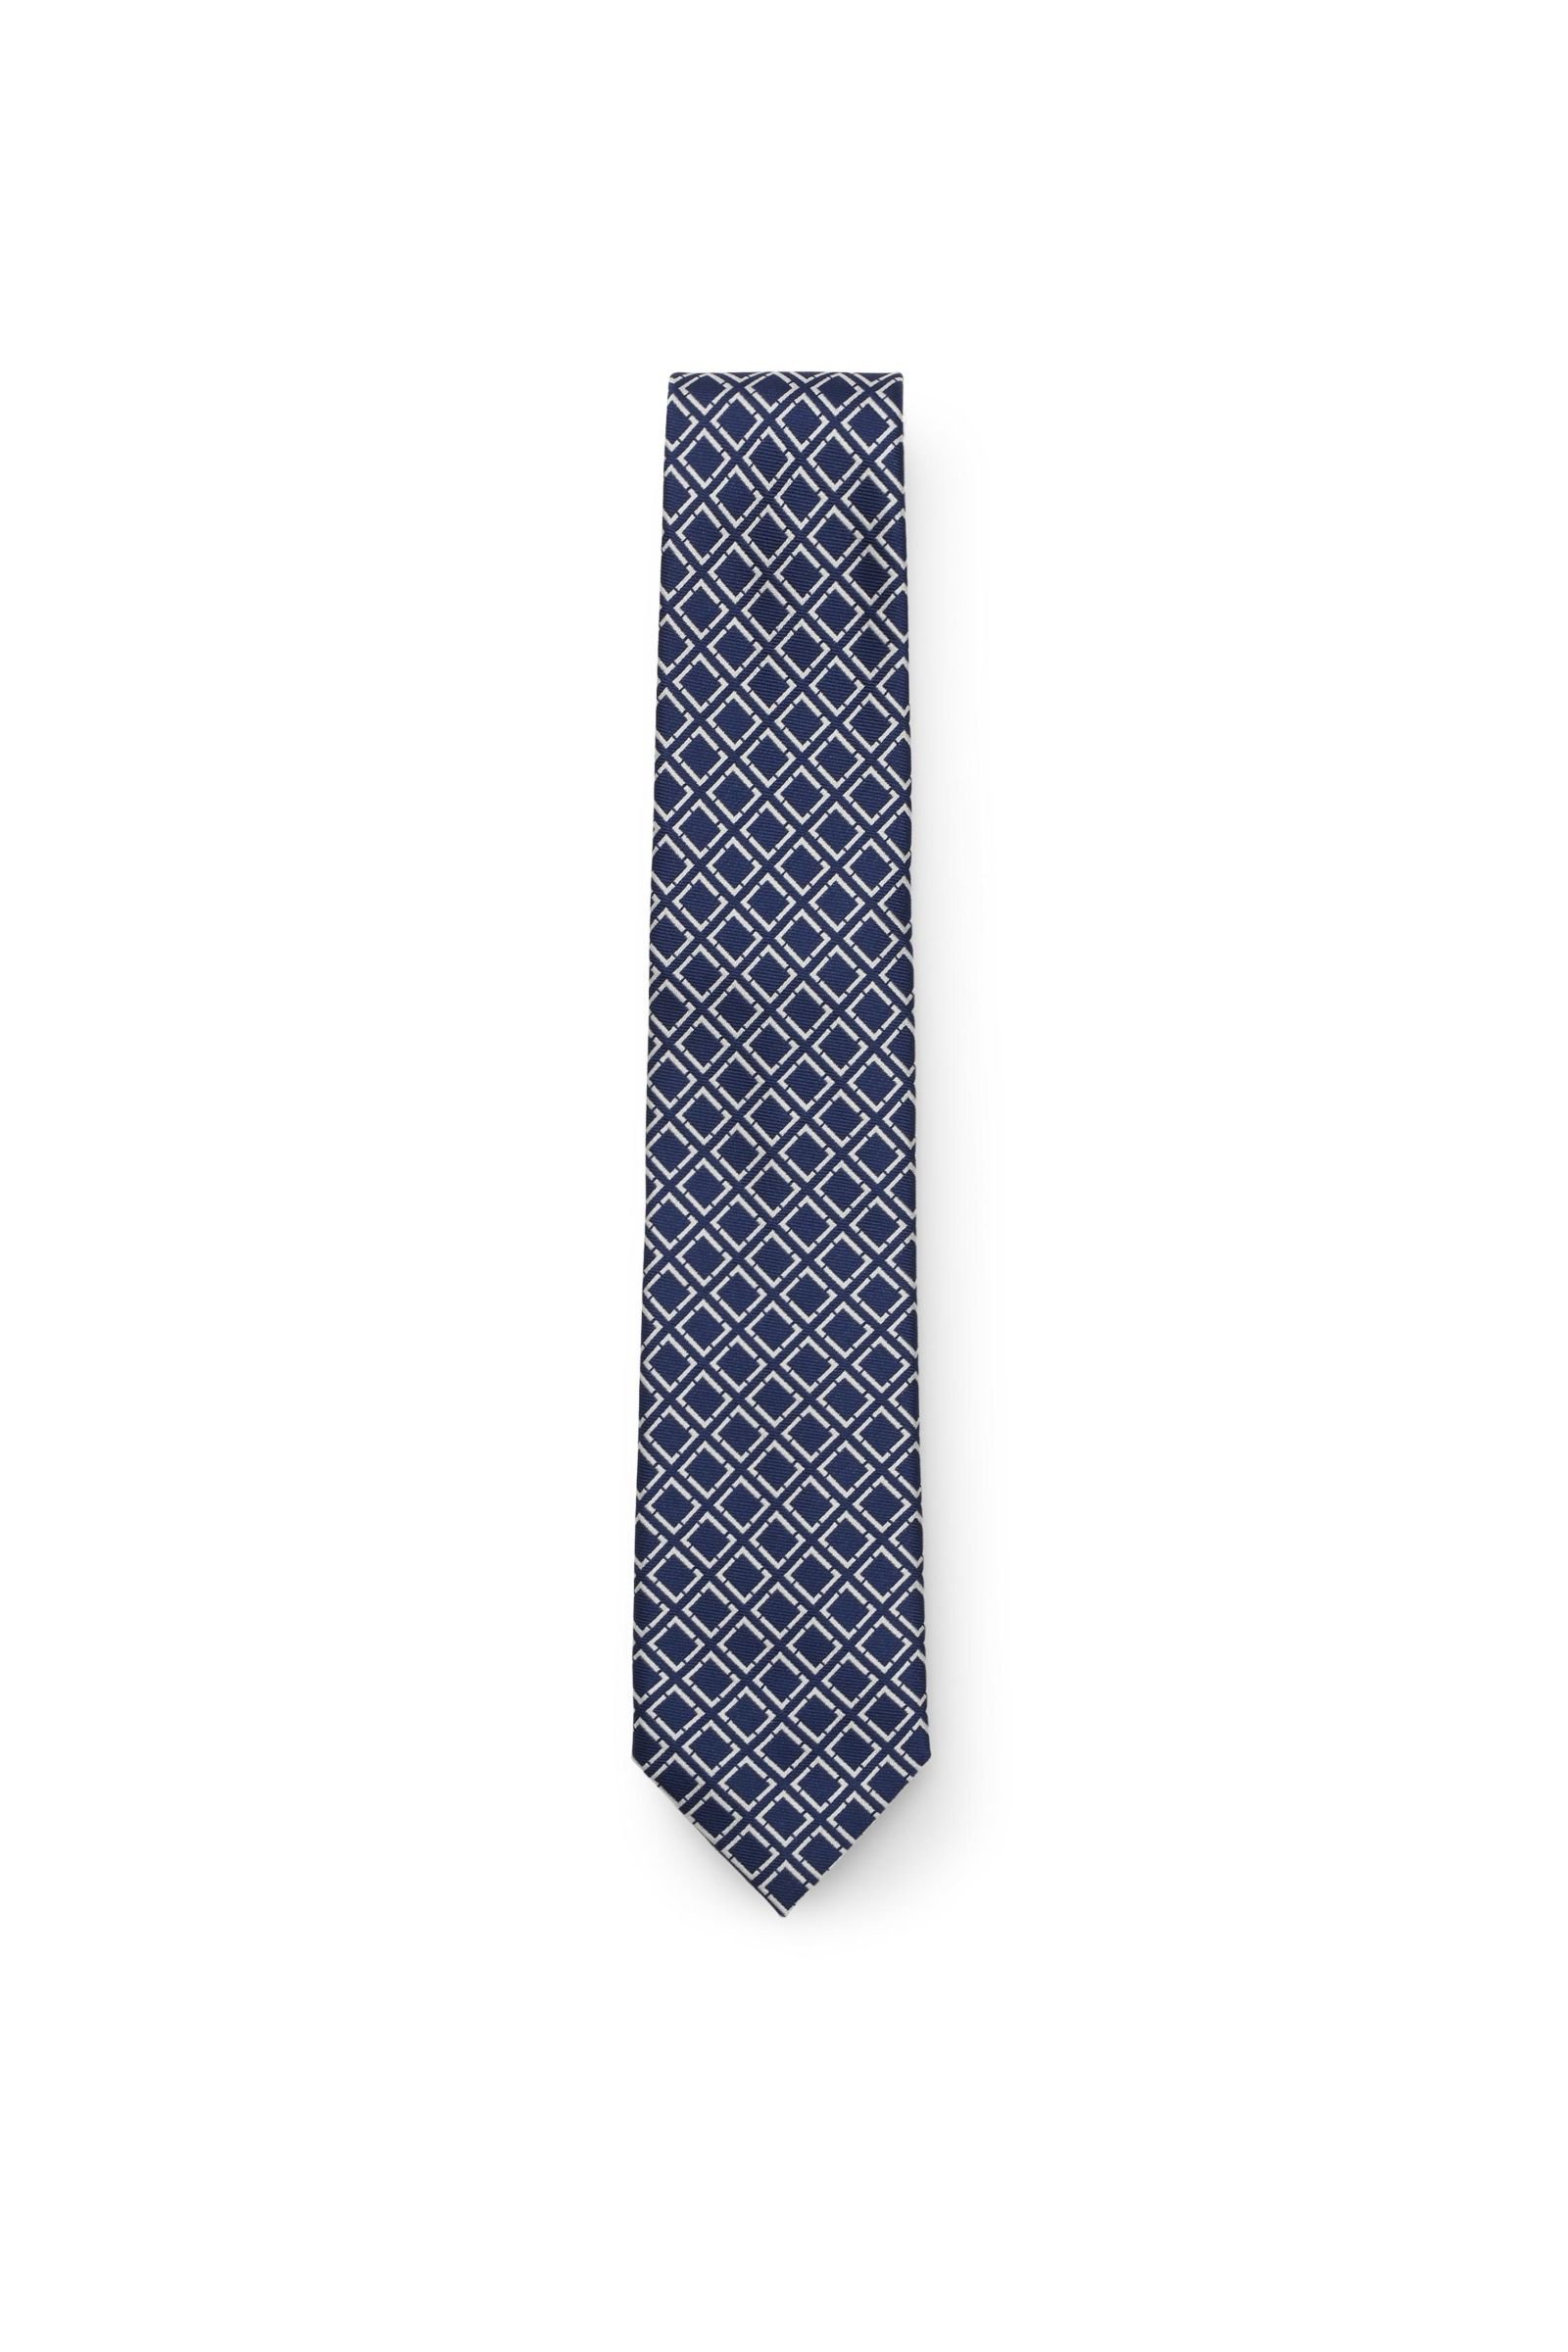 Silk tie navy/white patterned